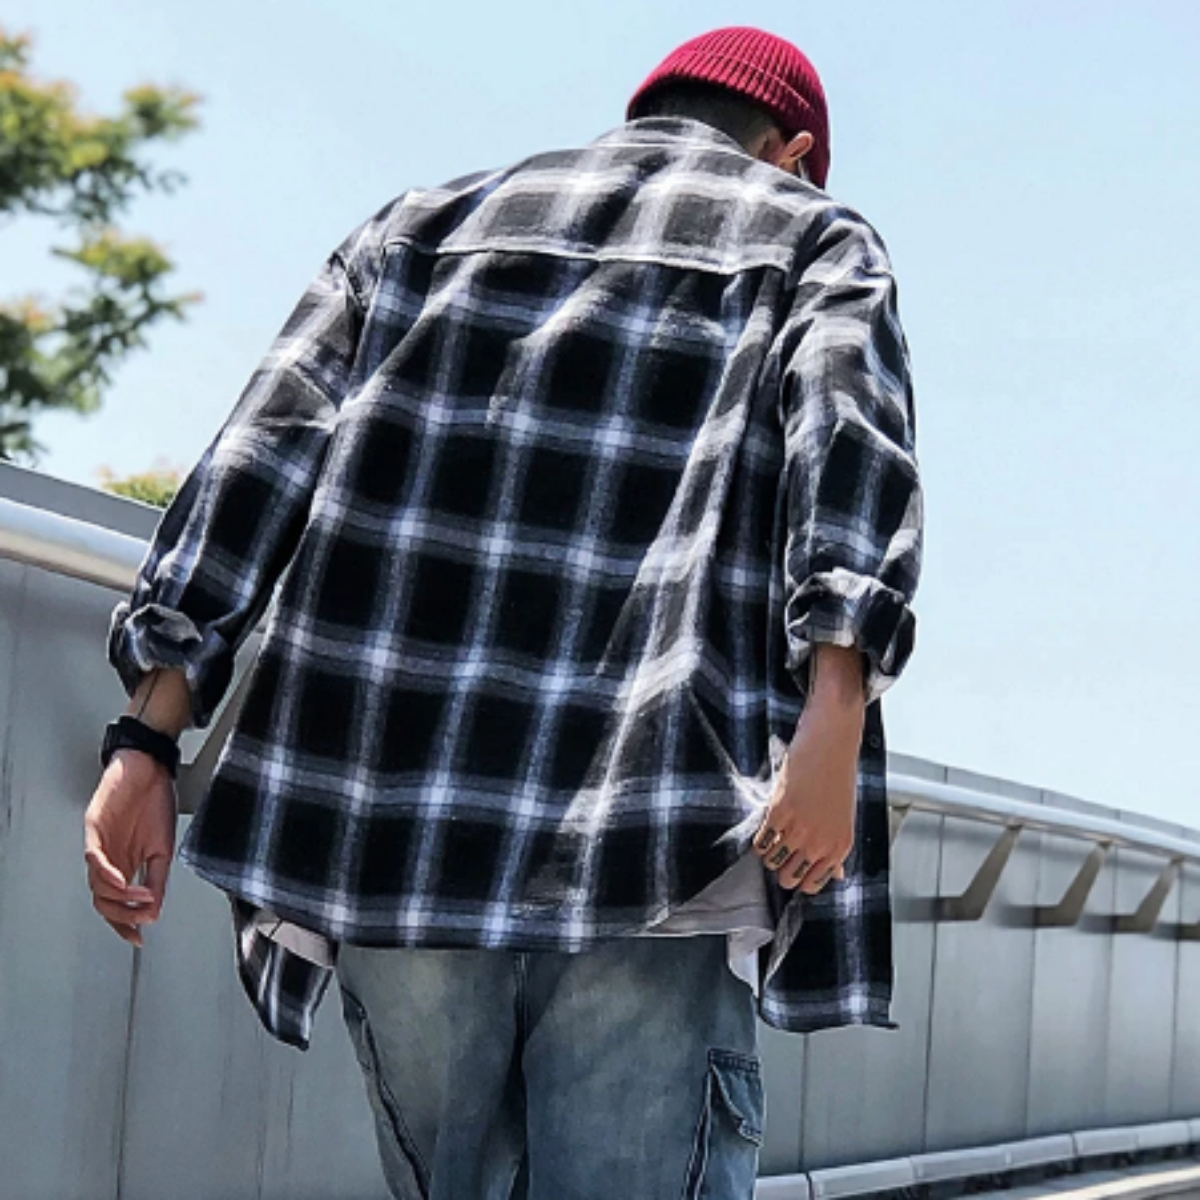 An American Legend Ride enthusiast in a Men's Classic Plaid Flannel Shirt, Black/White walking on a bridge.